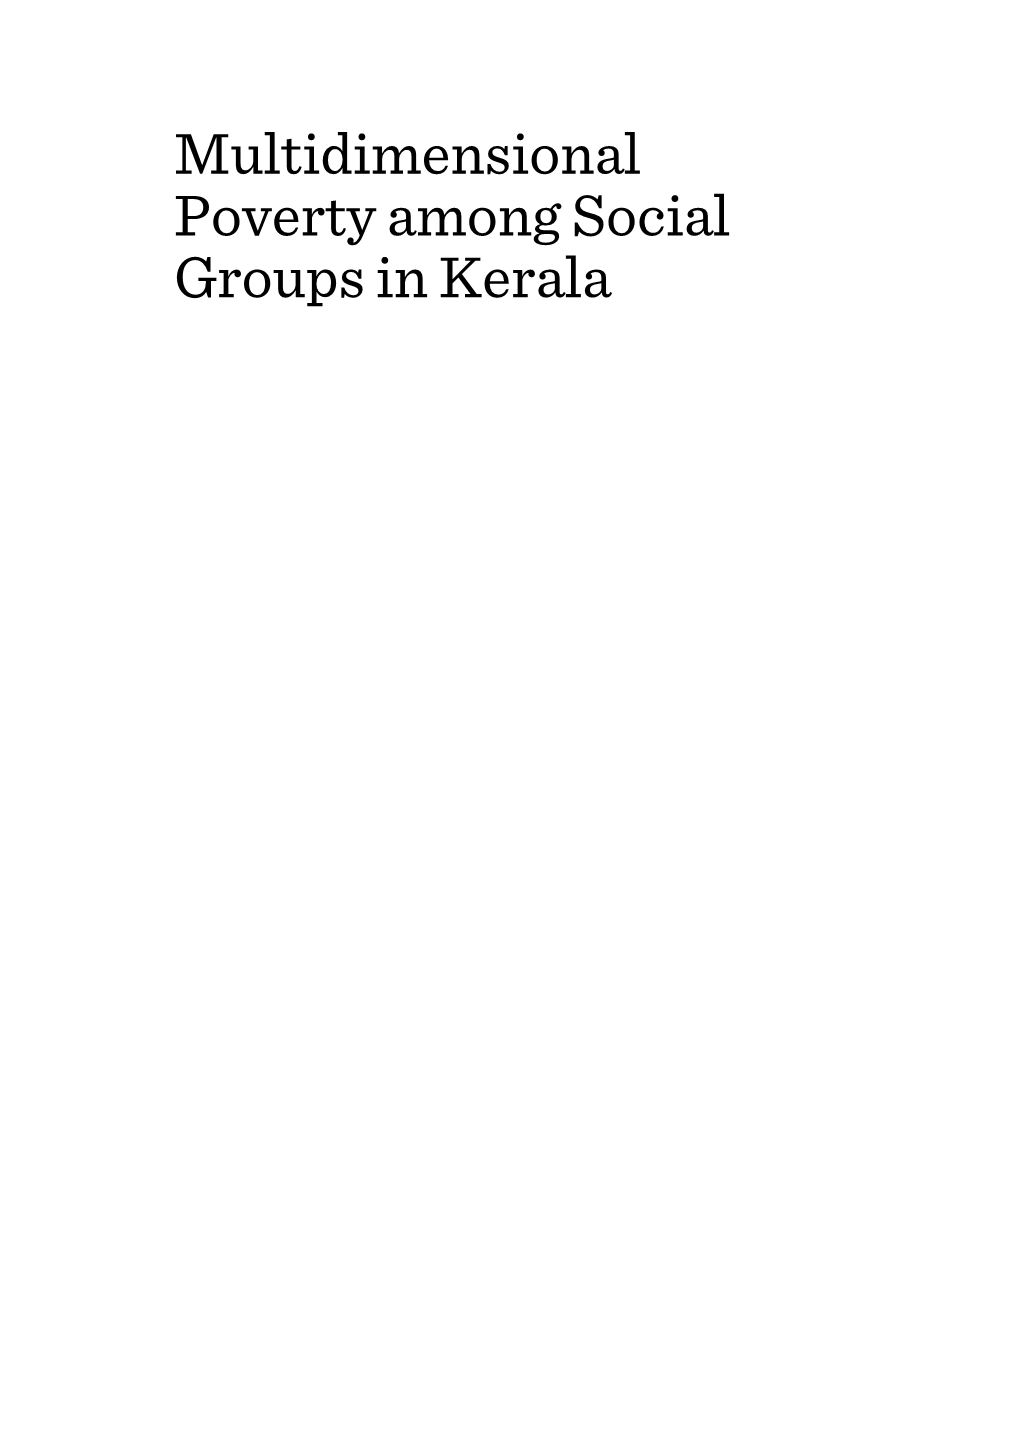 Multidimensional Poverty Among Social Groups in Kerala